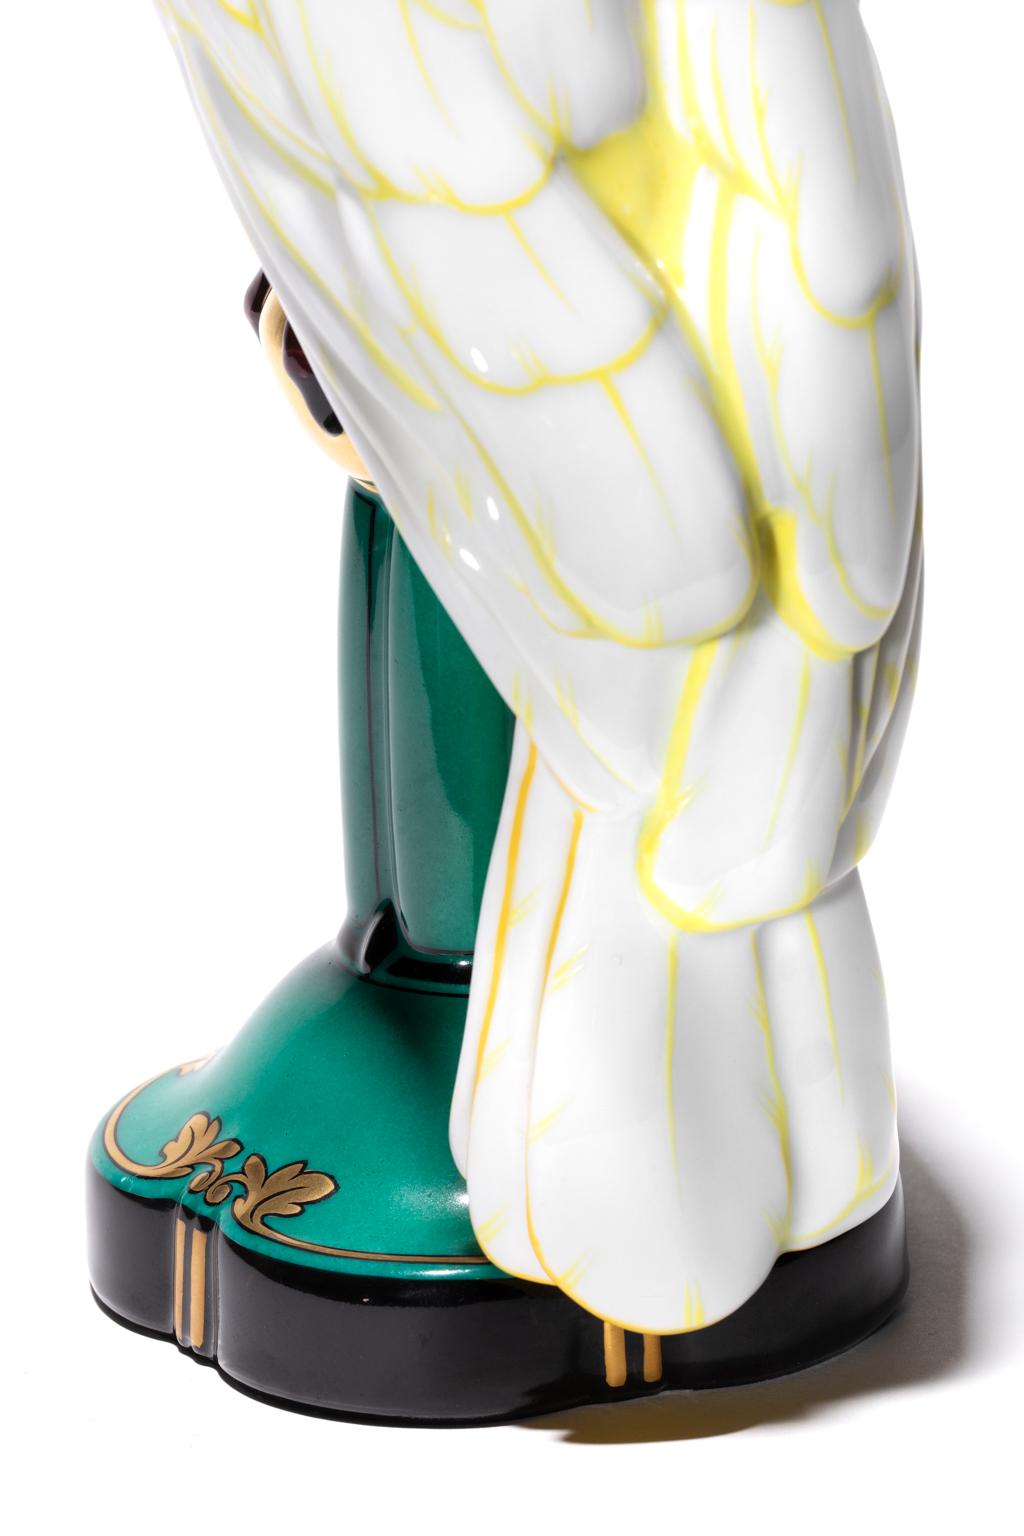 Gold Hutschenreuther-Selb Porcelain Figurine 